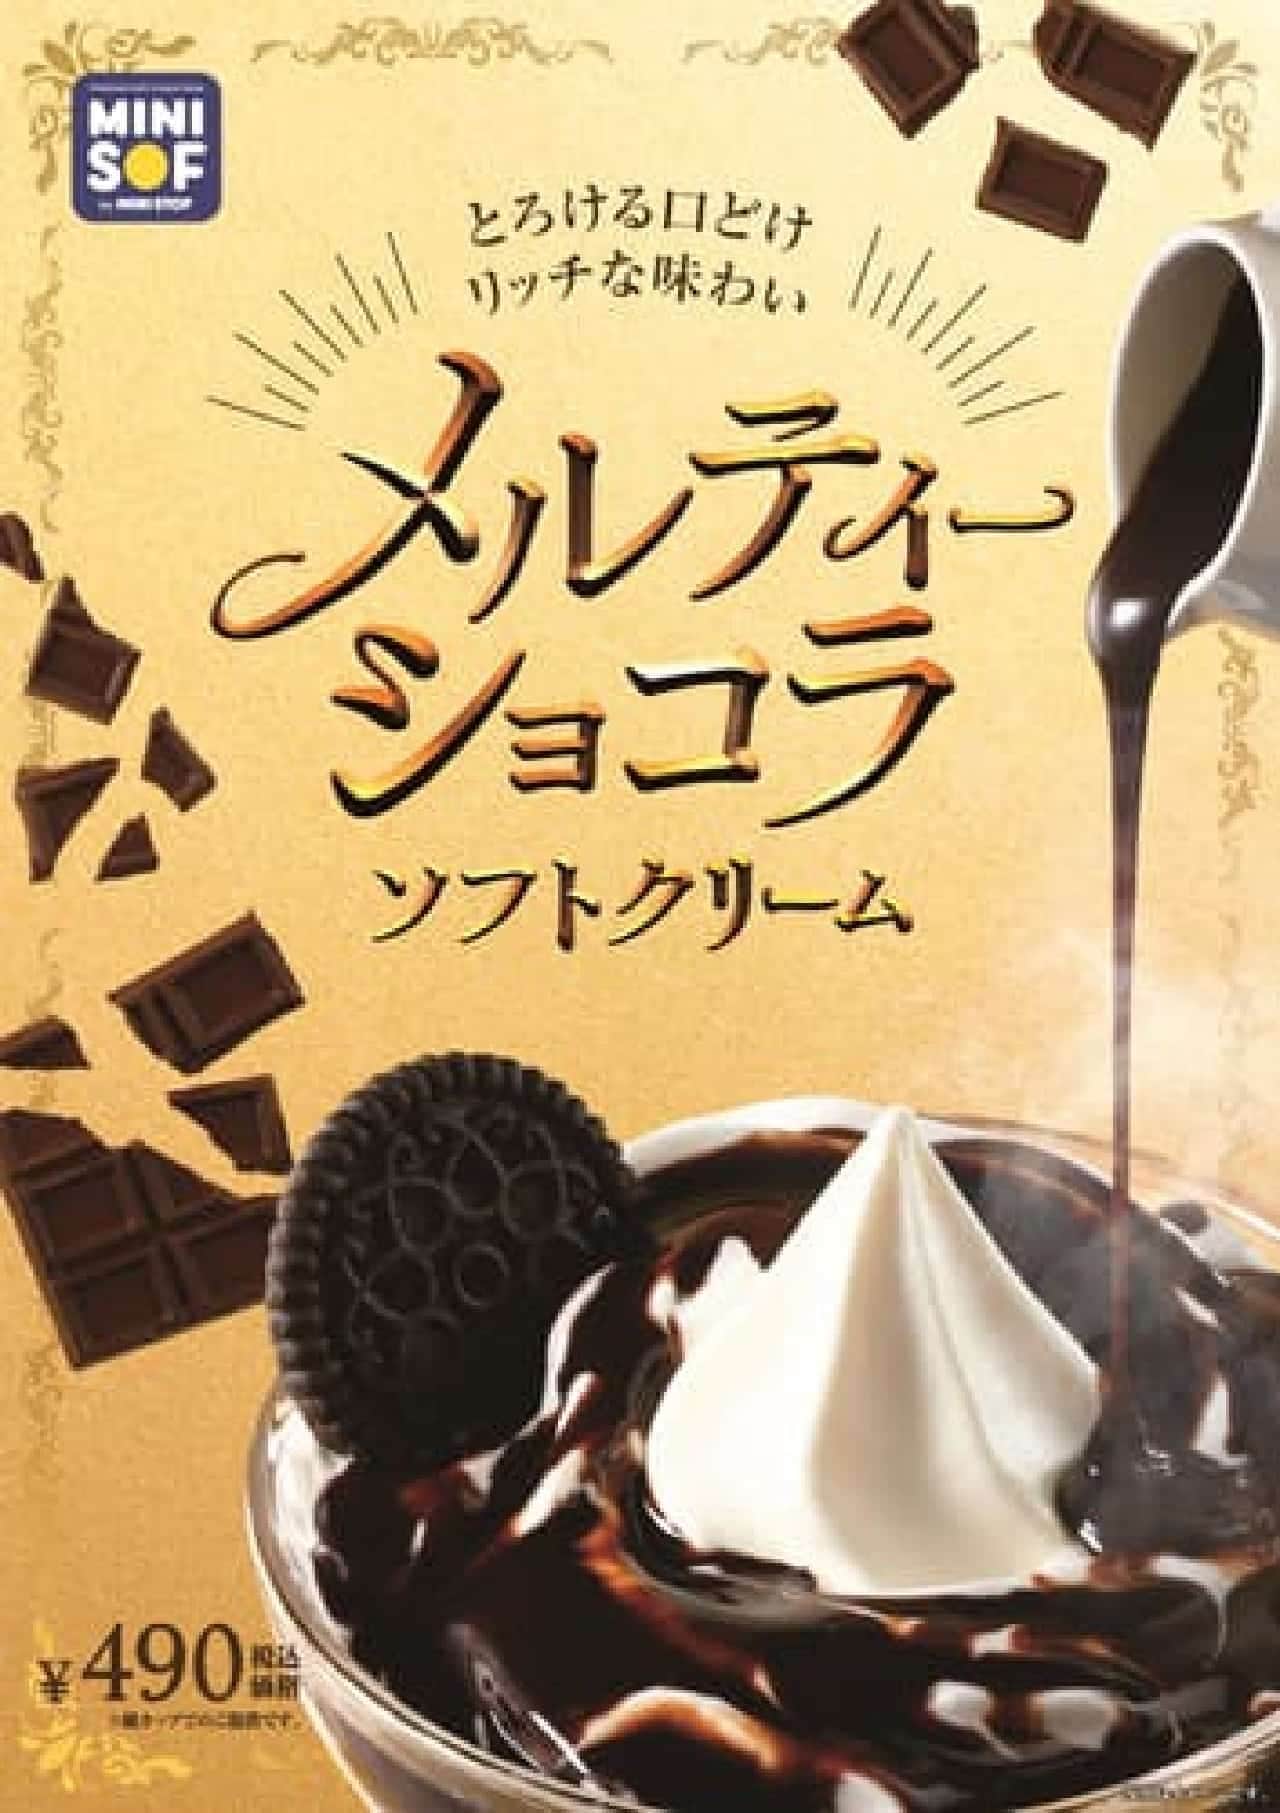 Minisof "melty chocolate soft serve ice cream